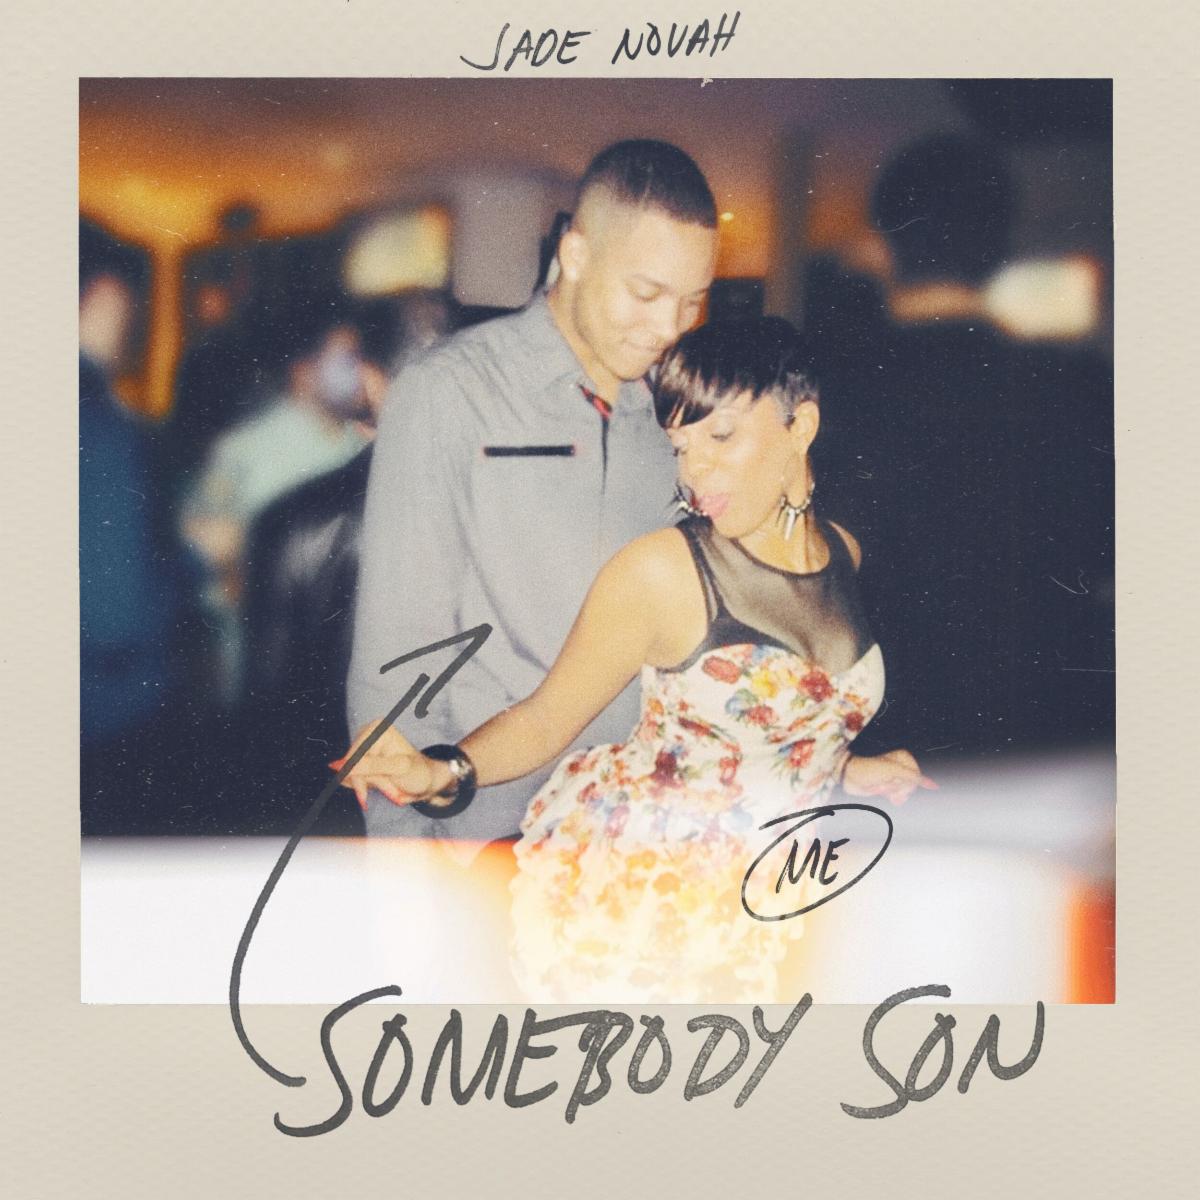 New Music: Jade Novah - Somebody Son